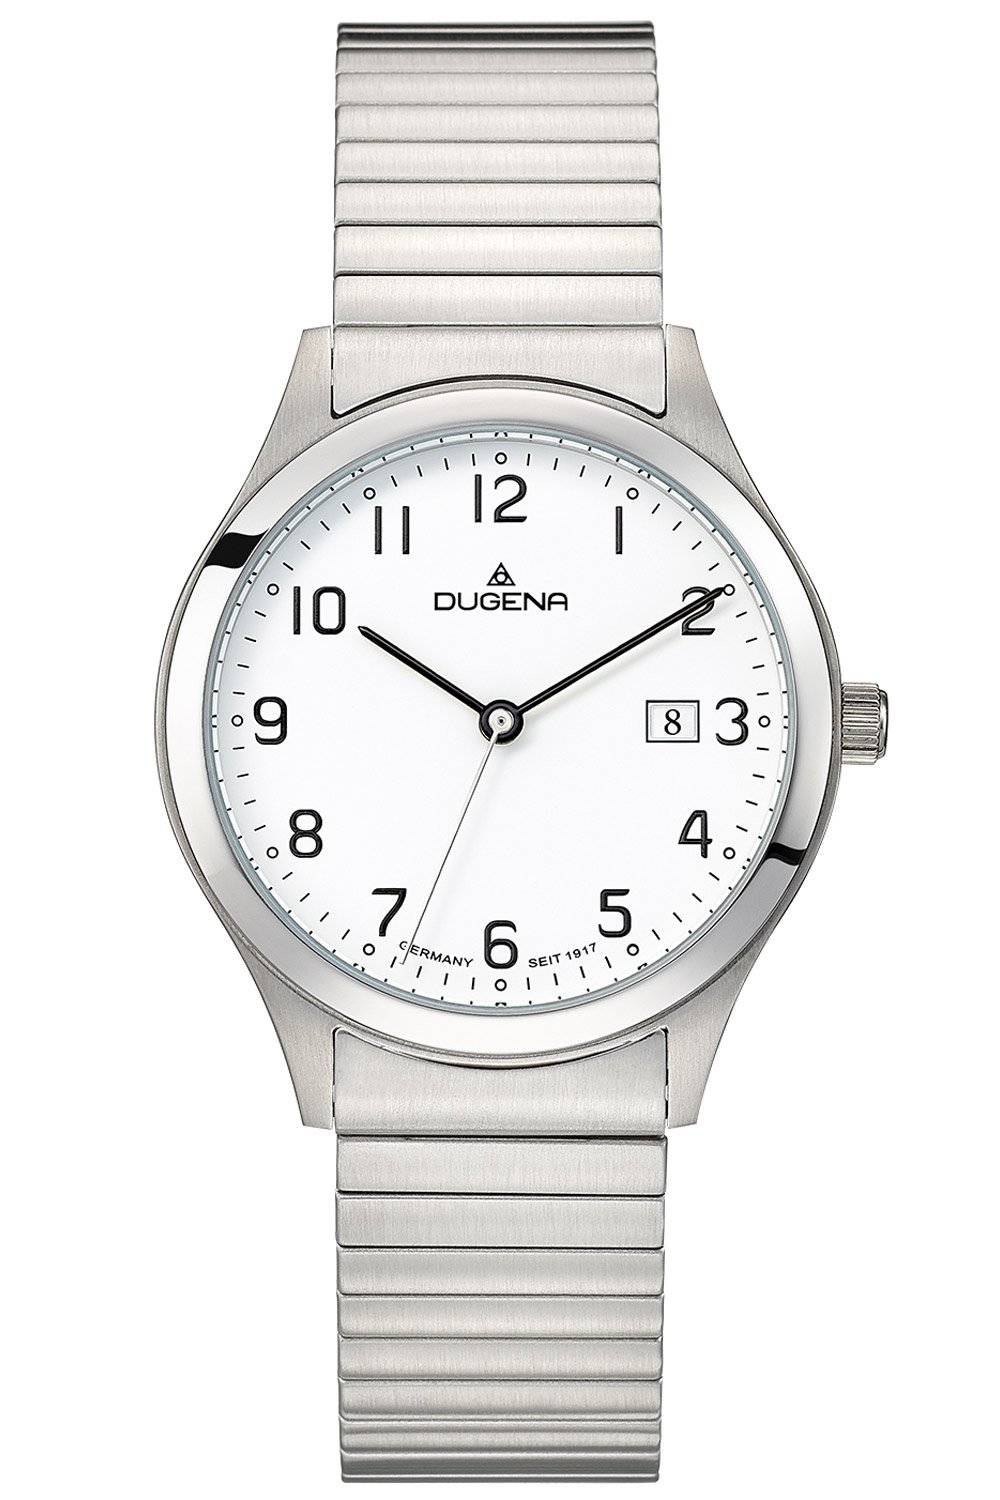 Dugena Men's Watch Bari Quartz with Elastic Strap 4460753 • uhrcenter